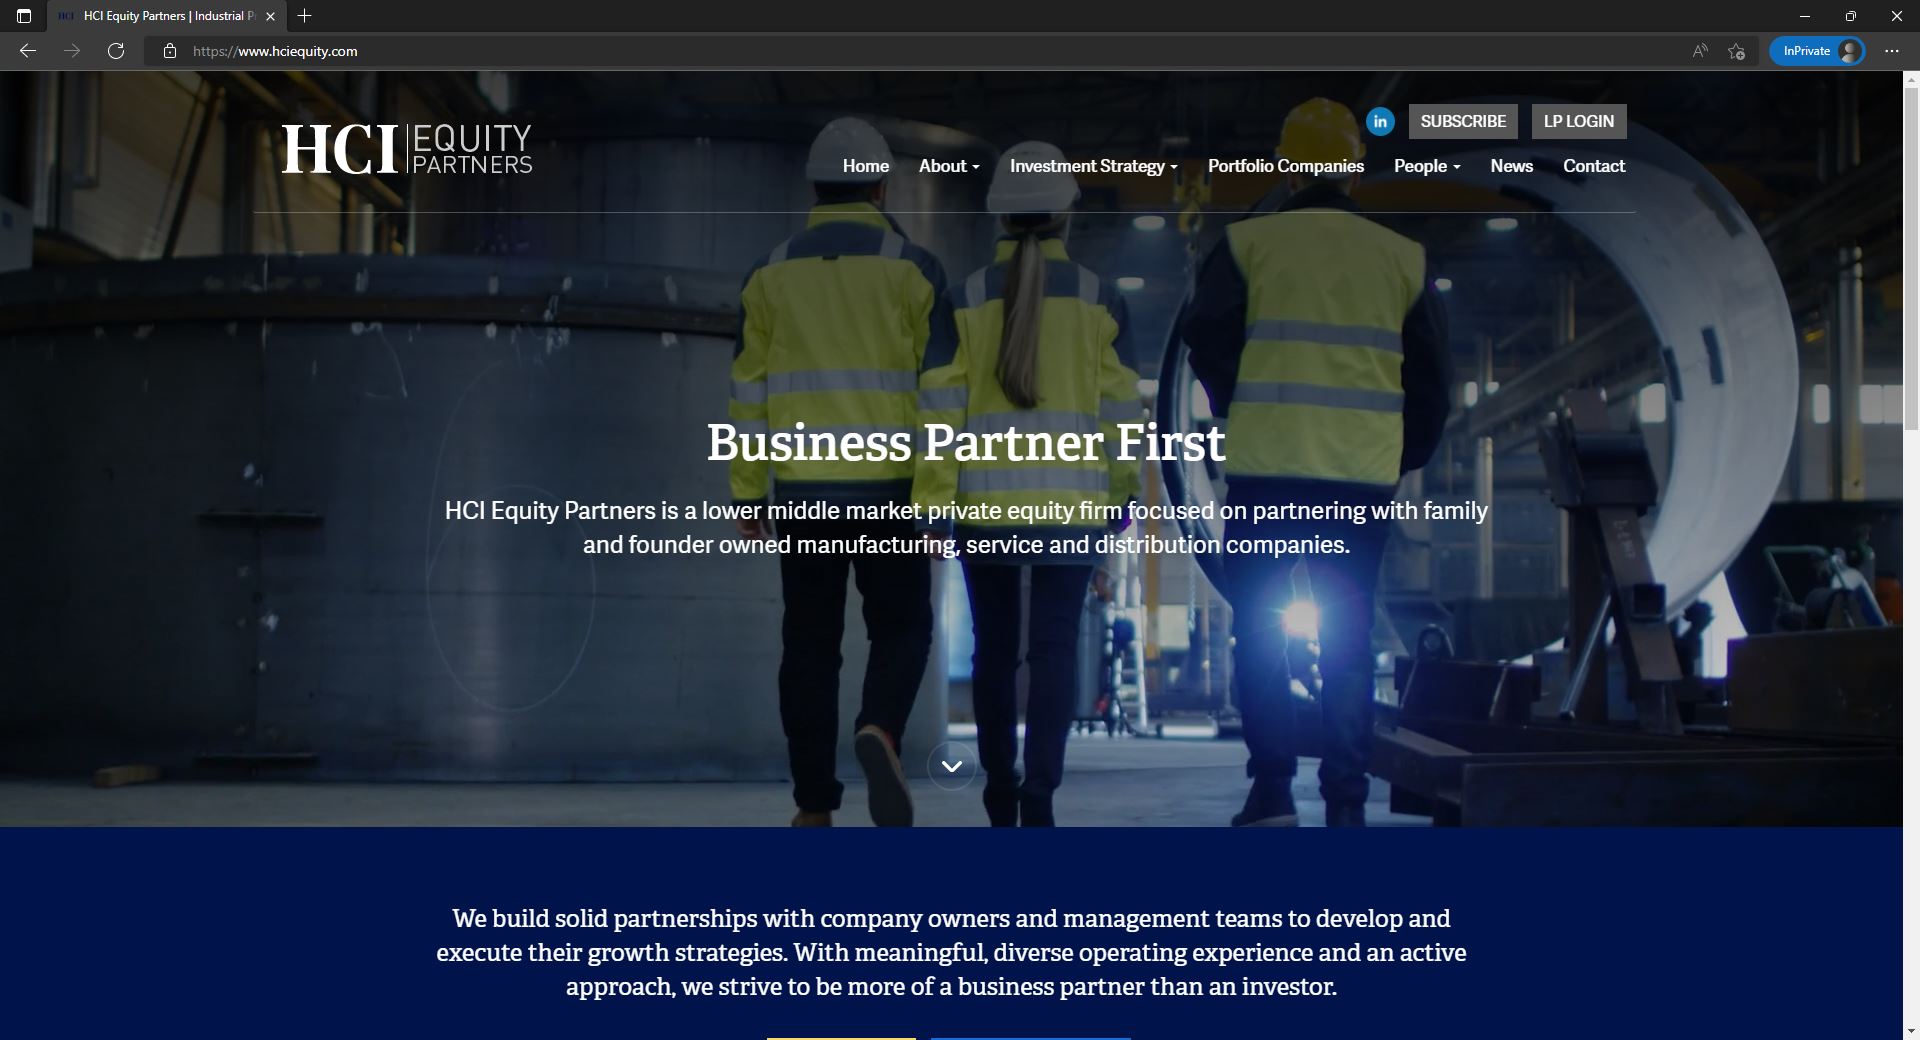 HCI Equity Partners website homepage